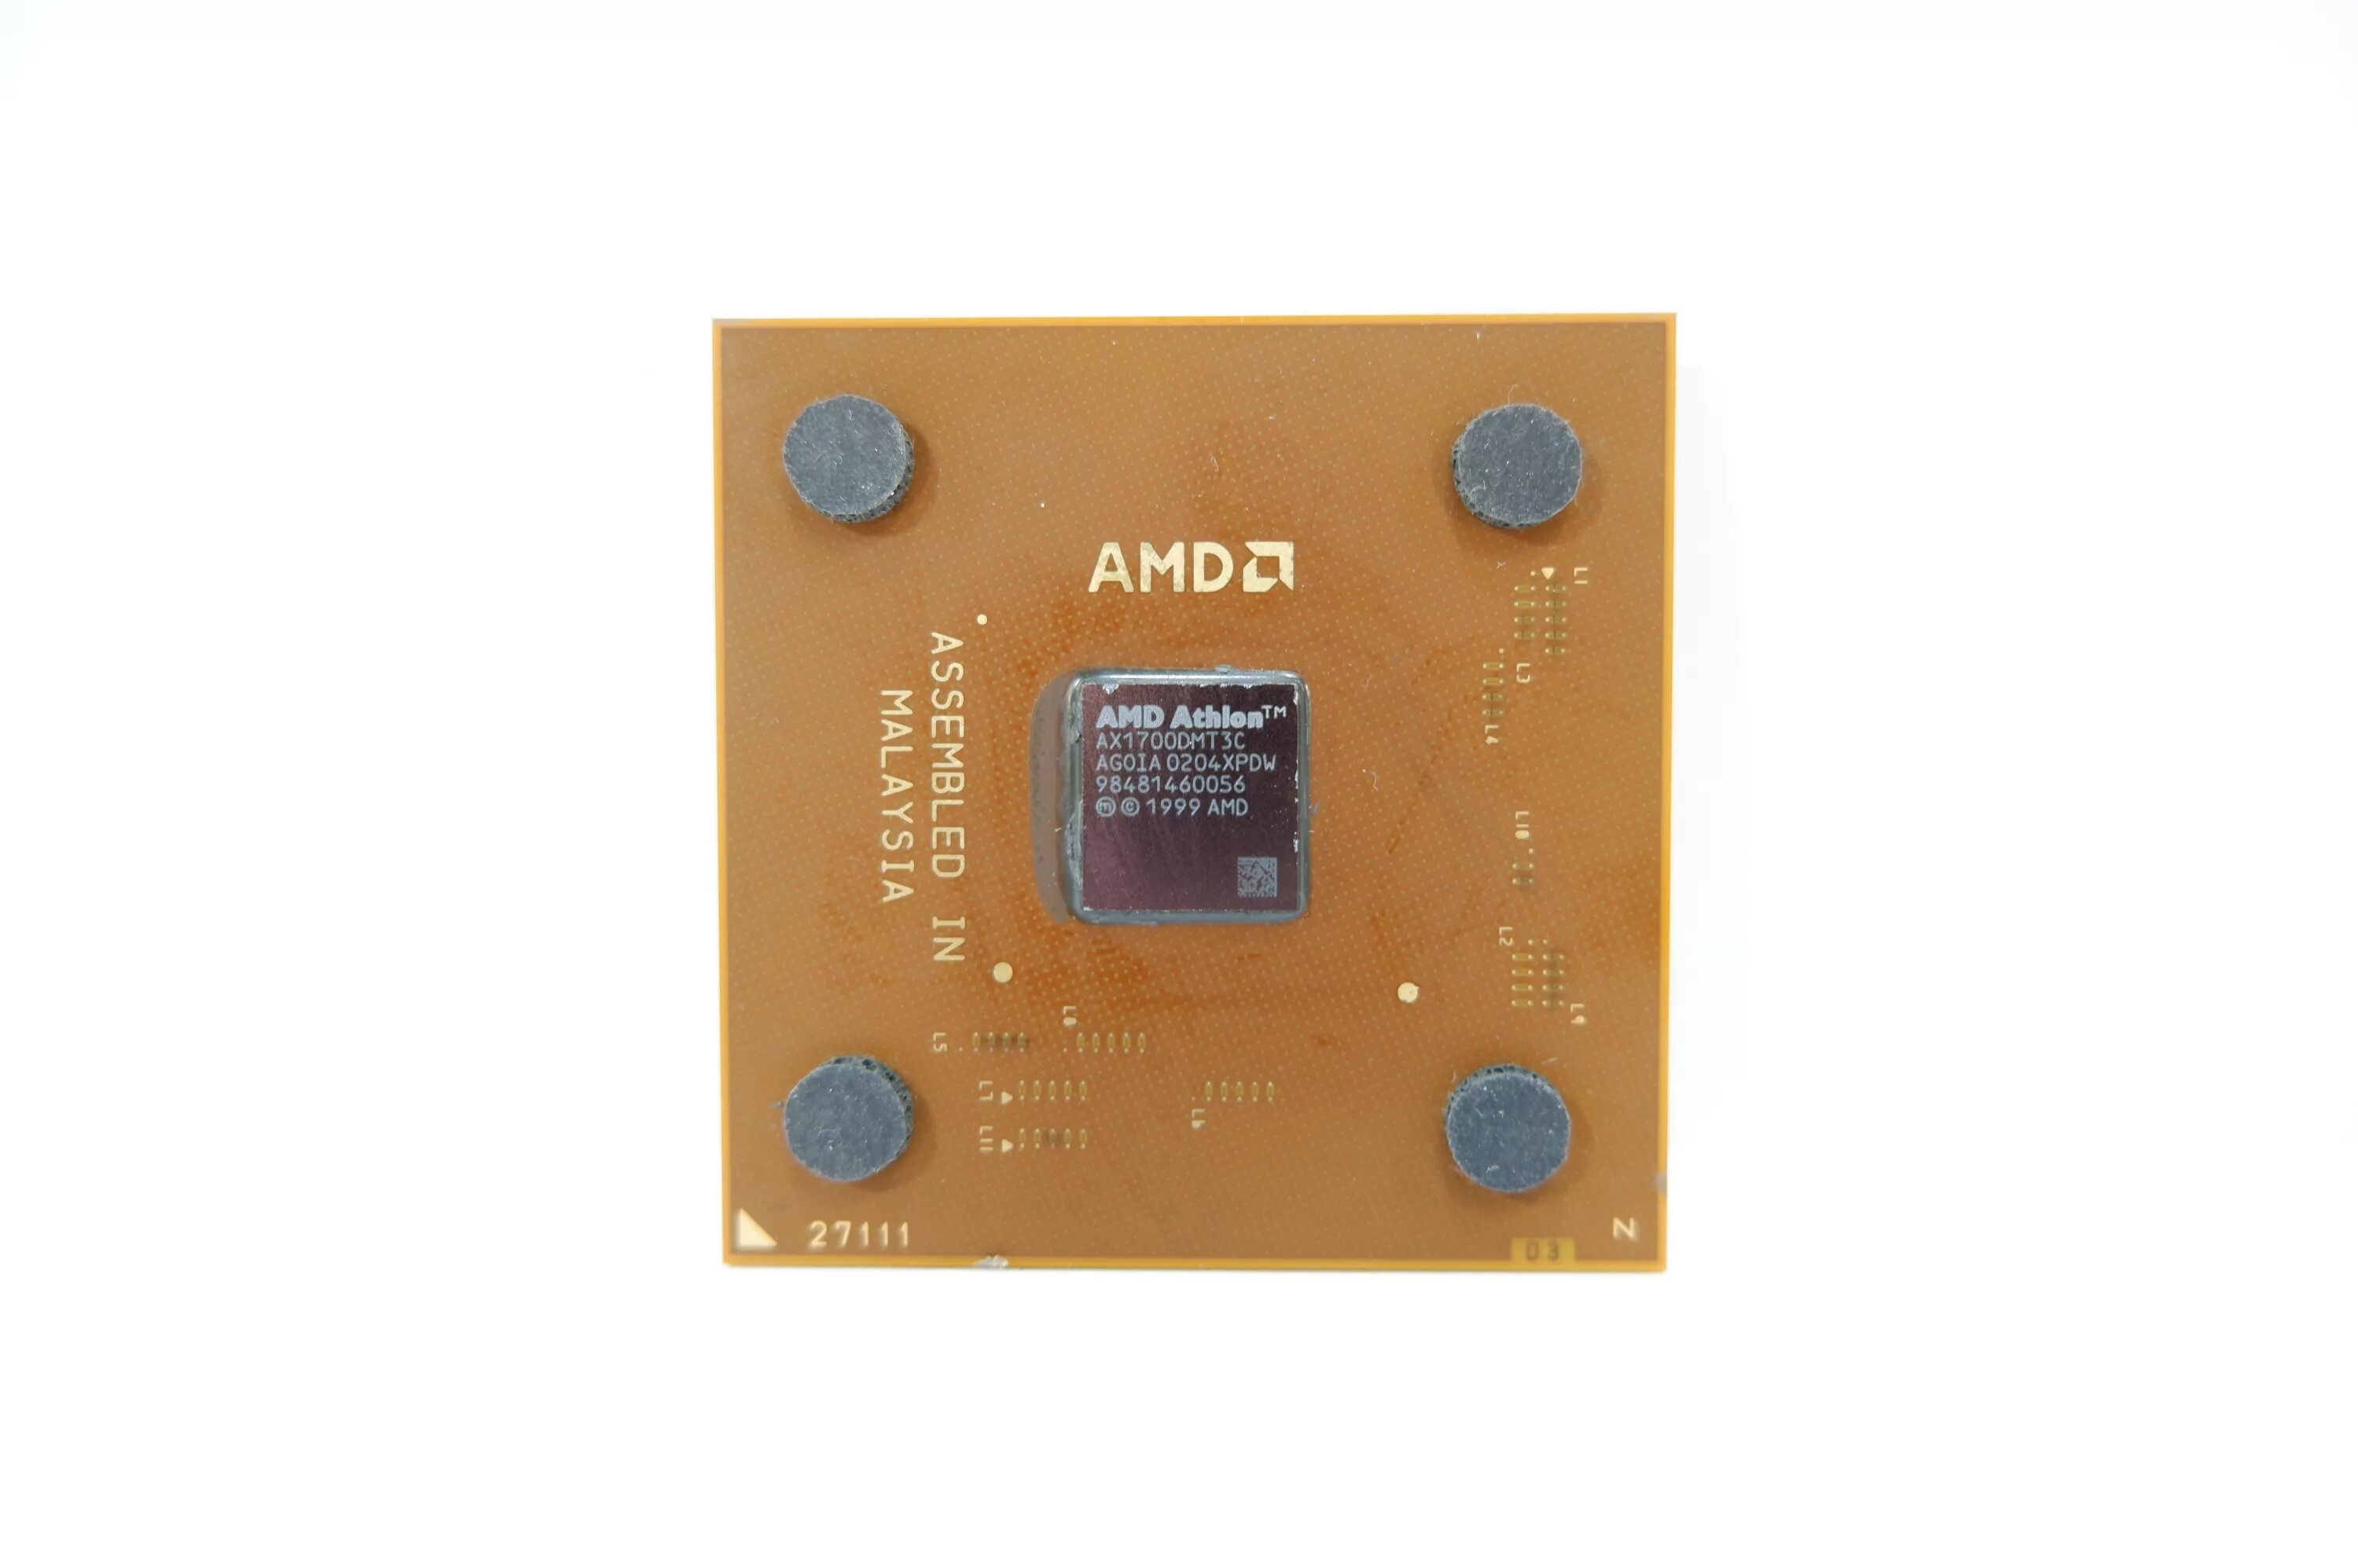 AMD Athlon XP 1700+. АМД процессор для сокета 462. Athlon 1700+ процессор. AMD Athlon 462 сокет.